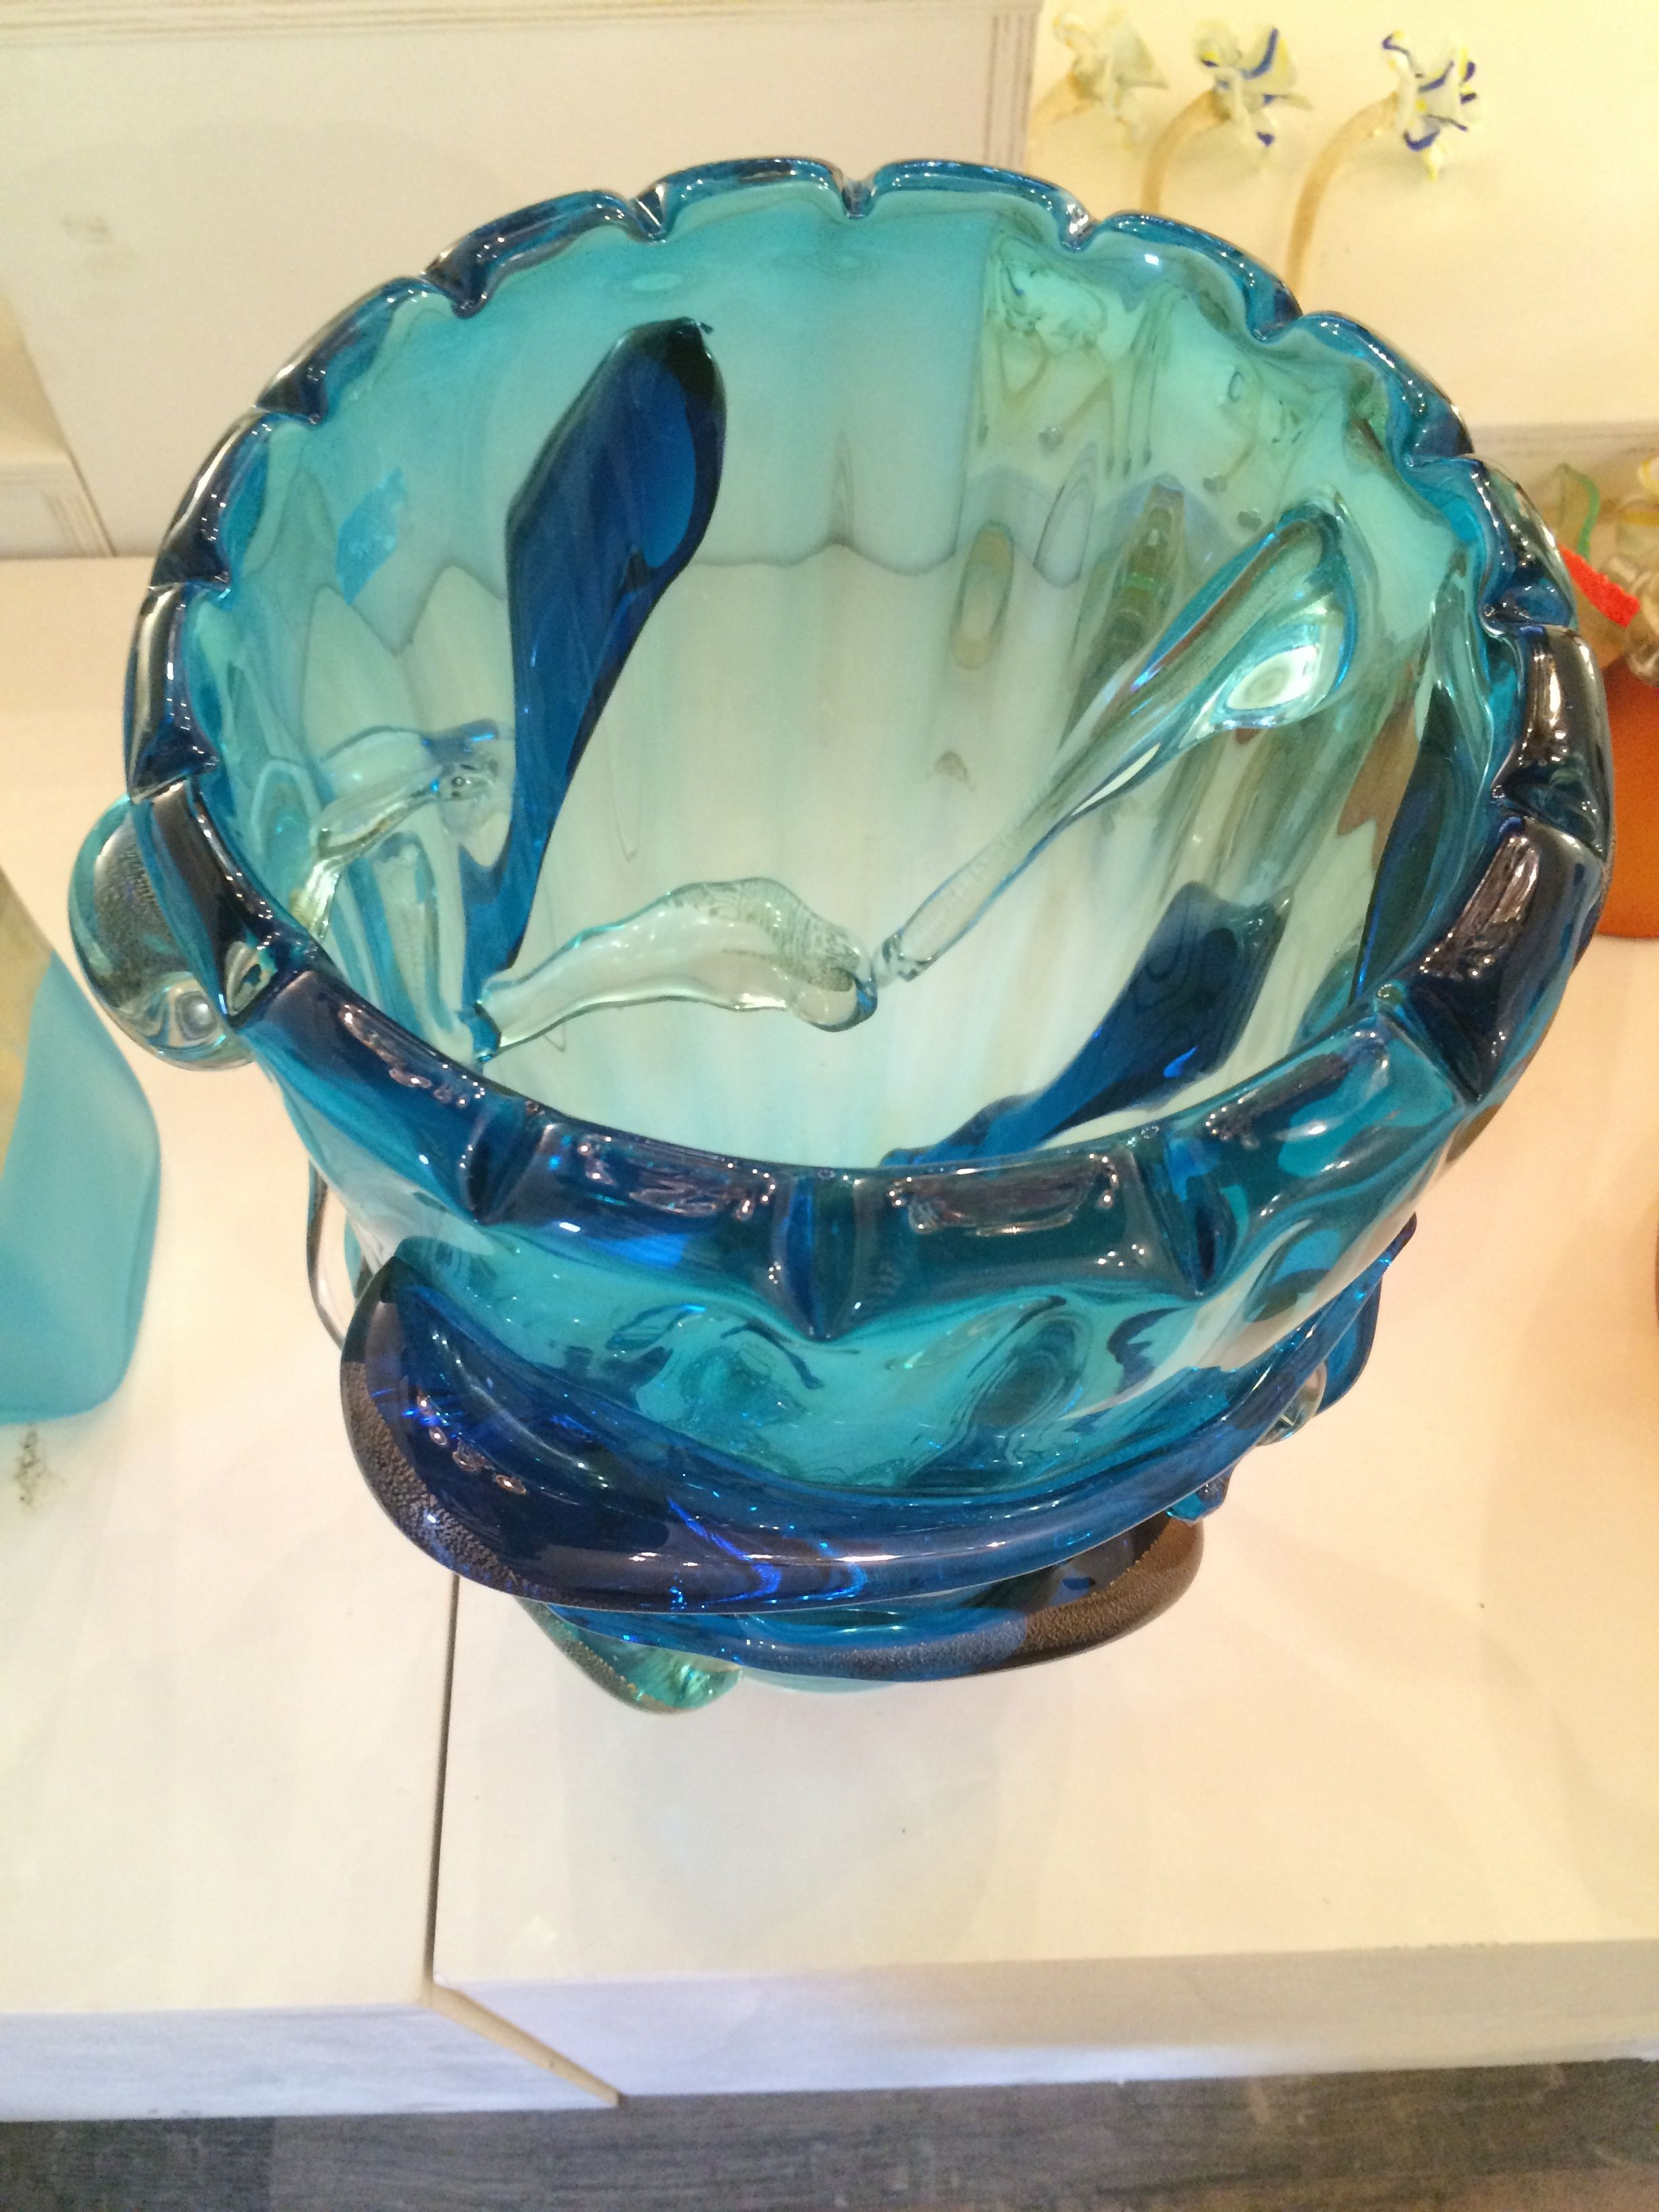 murano blue vase of vase en verre artisanal de murano fabrication traditionnelle selon with regard to vase en verre artisanal de murano fabrication traditionnelle selon les mathodes ancestrales des maatres verriers